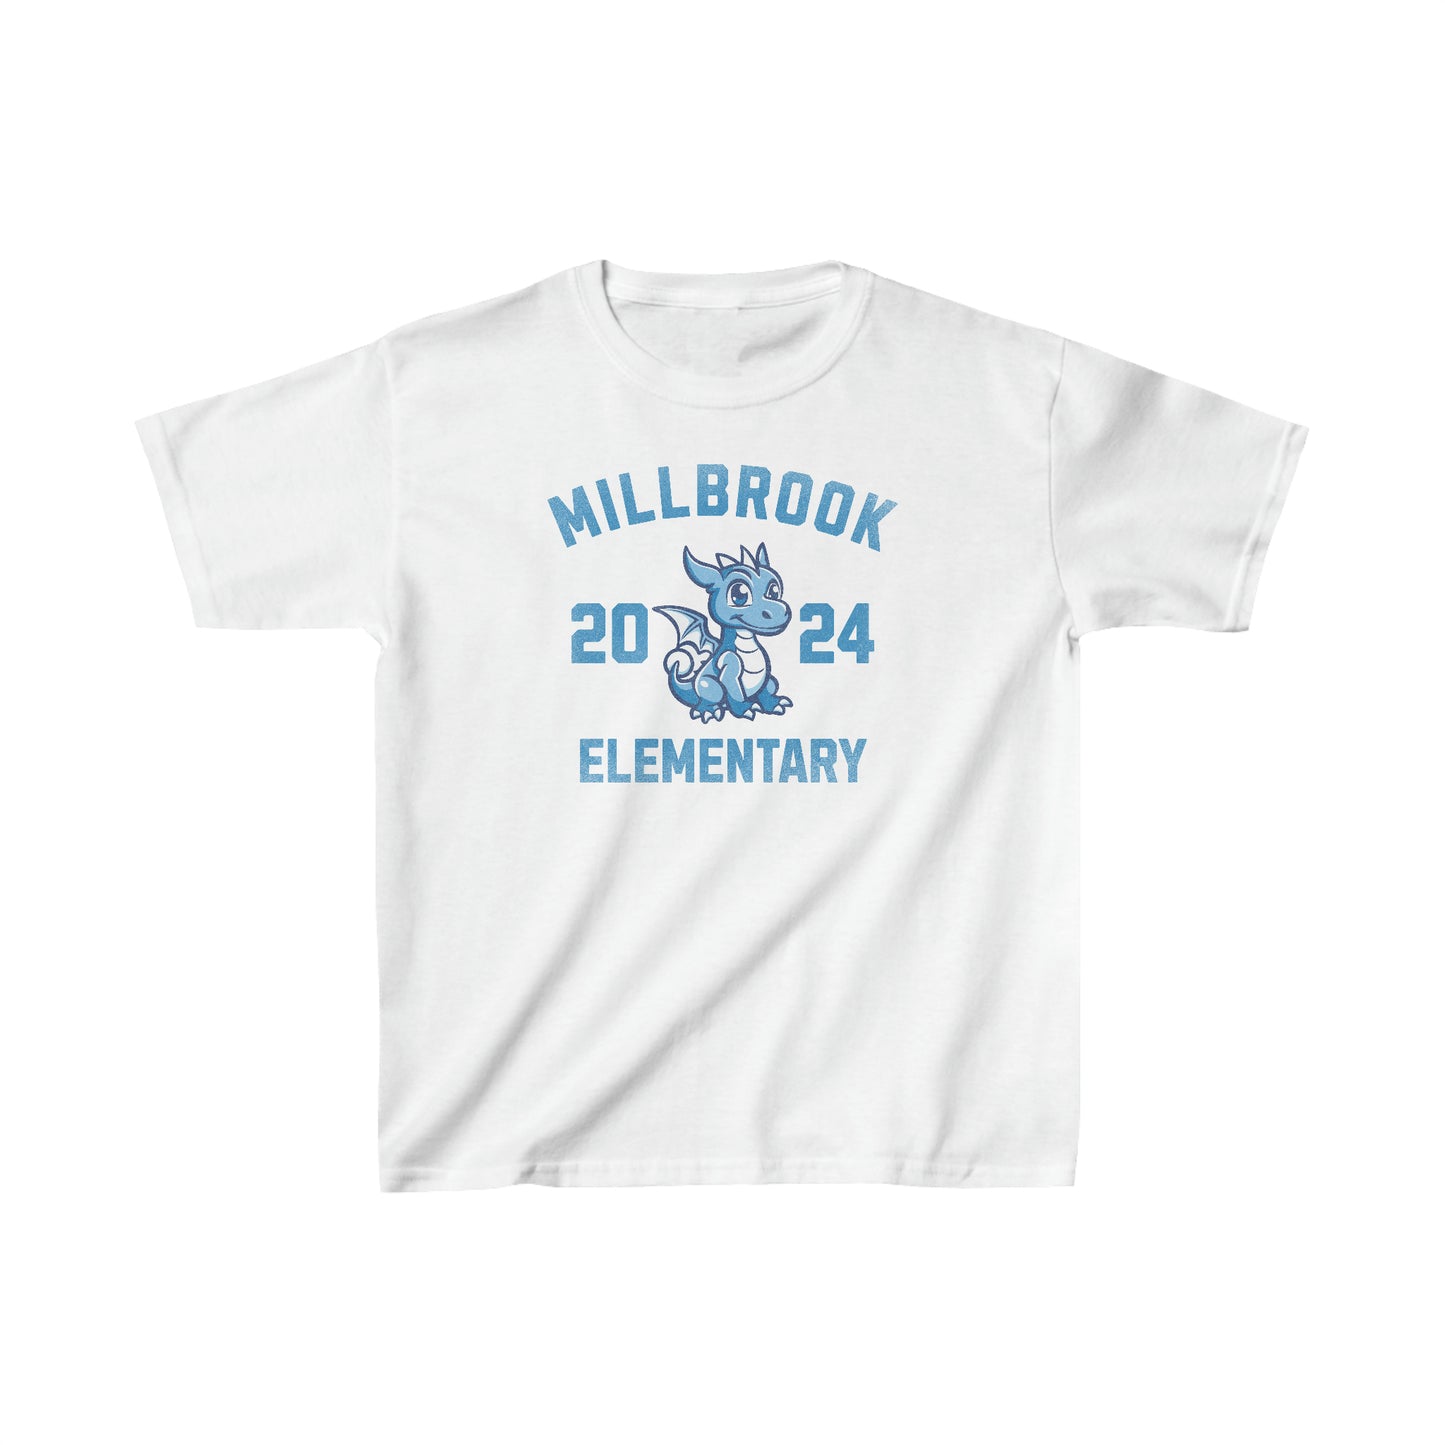 Millbrook Elementary 2024 Tee - Youth